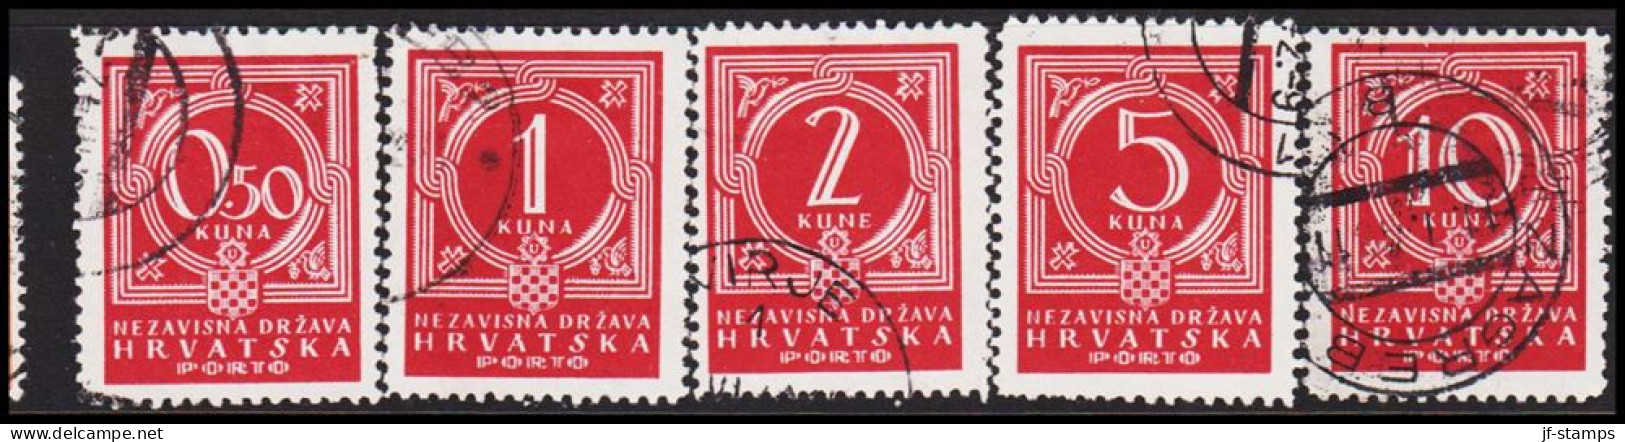 1941. HRVATSKA NEZAVISNA DRZAVA HRVATSKA (SHIELD) Overprint On 5 D. (Michel PORTO 6-10) - JF546039 - Croatie